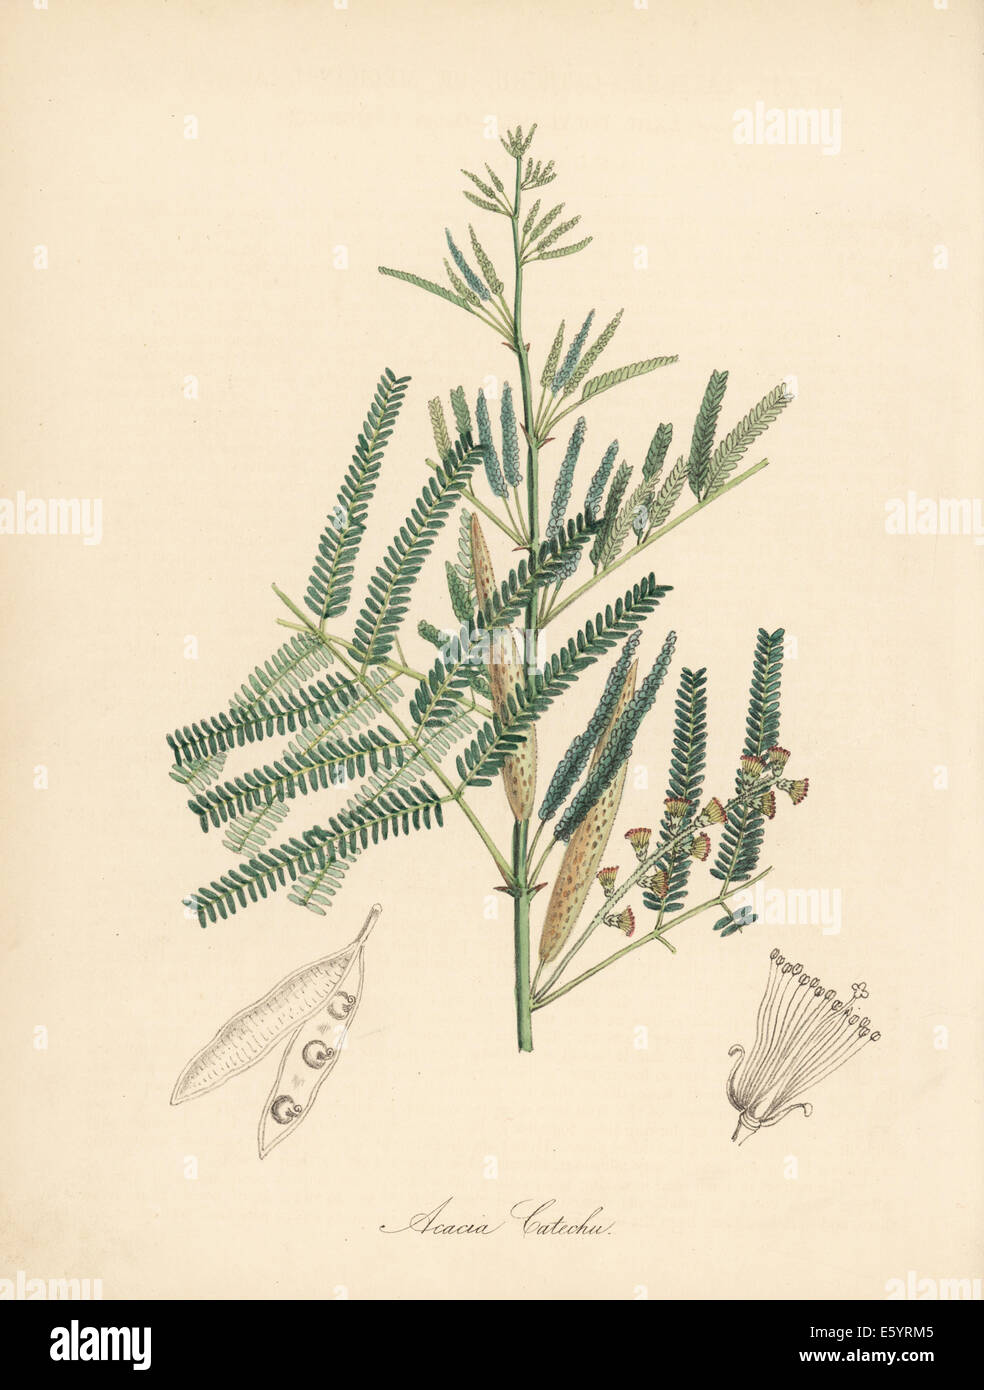 Catechu or medicinal acacia, Acacia catechu. Stock Photo